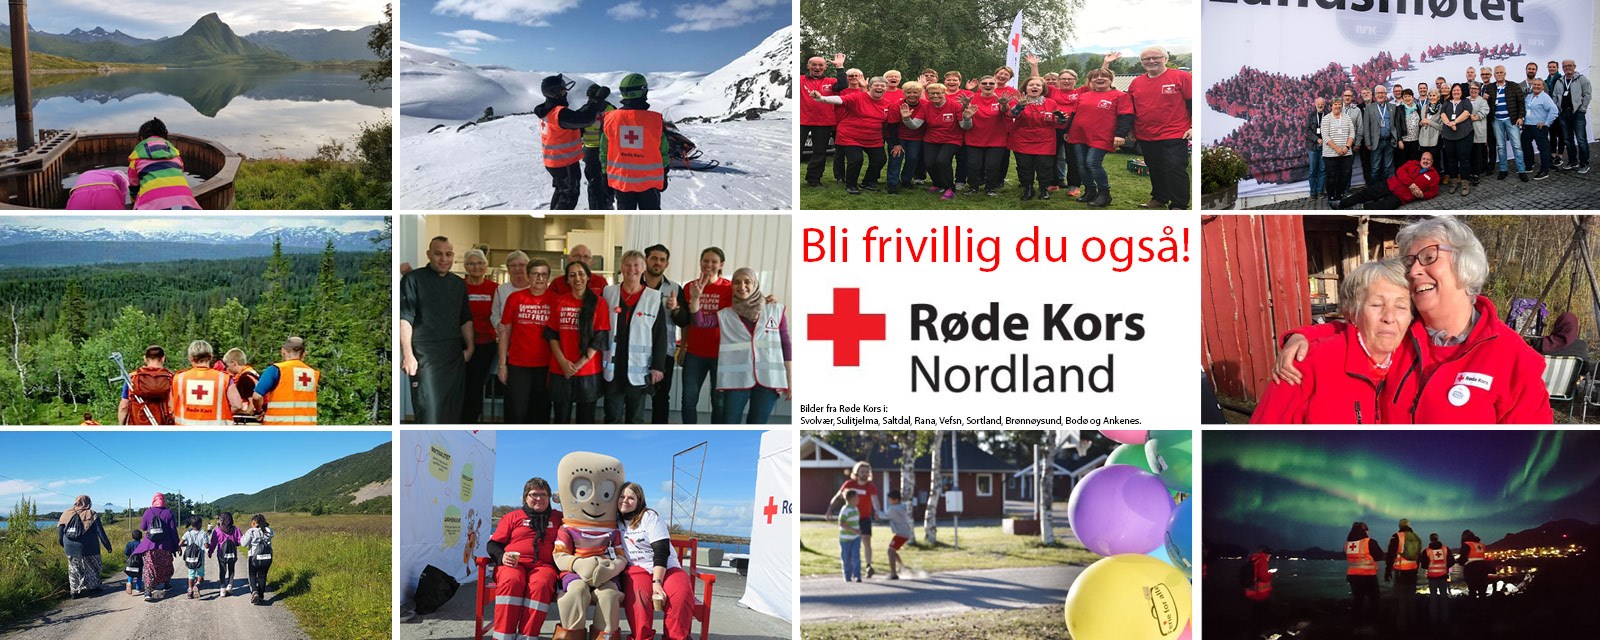 Nordland Røde Kors inviterer til fagsamling 26.-28. oktober 2018.